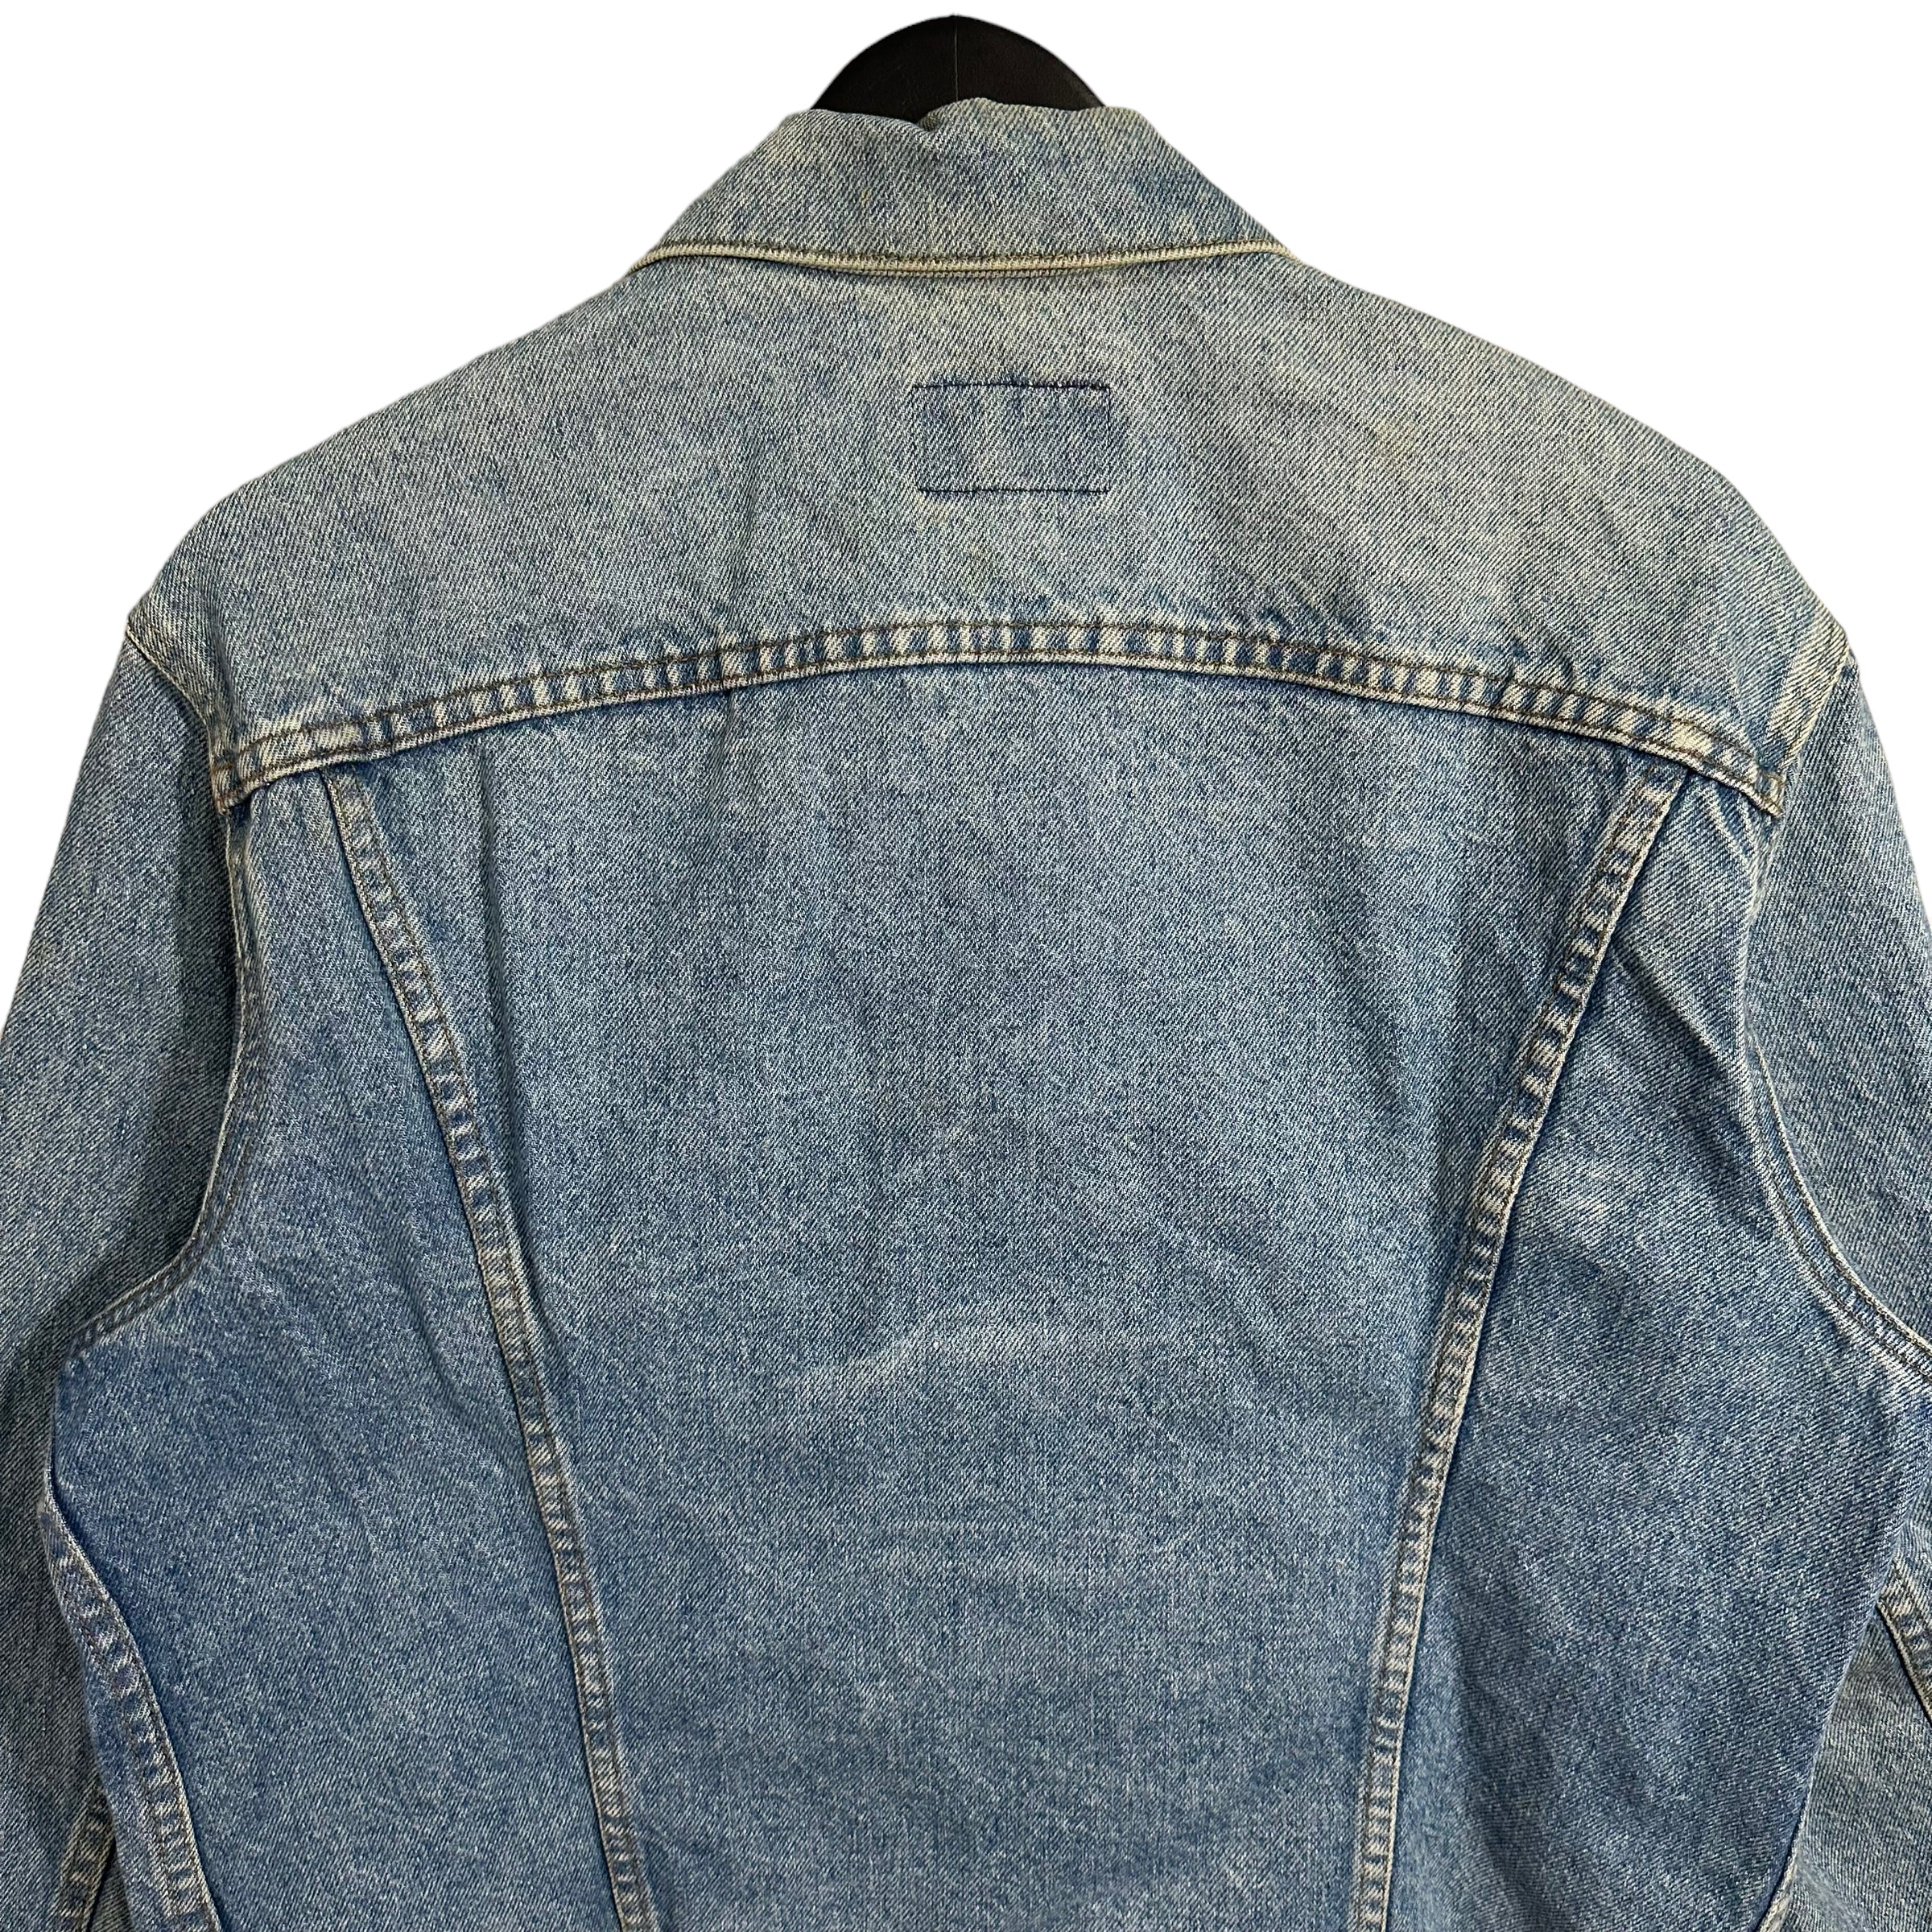 Vintage Levi's Denim Jacket 90s